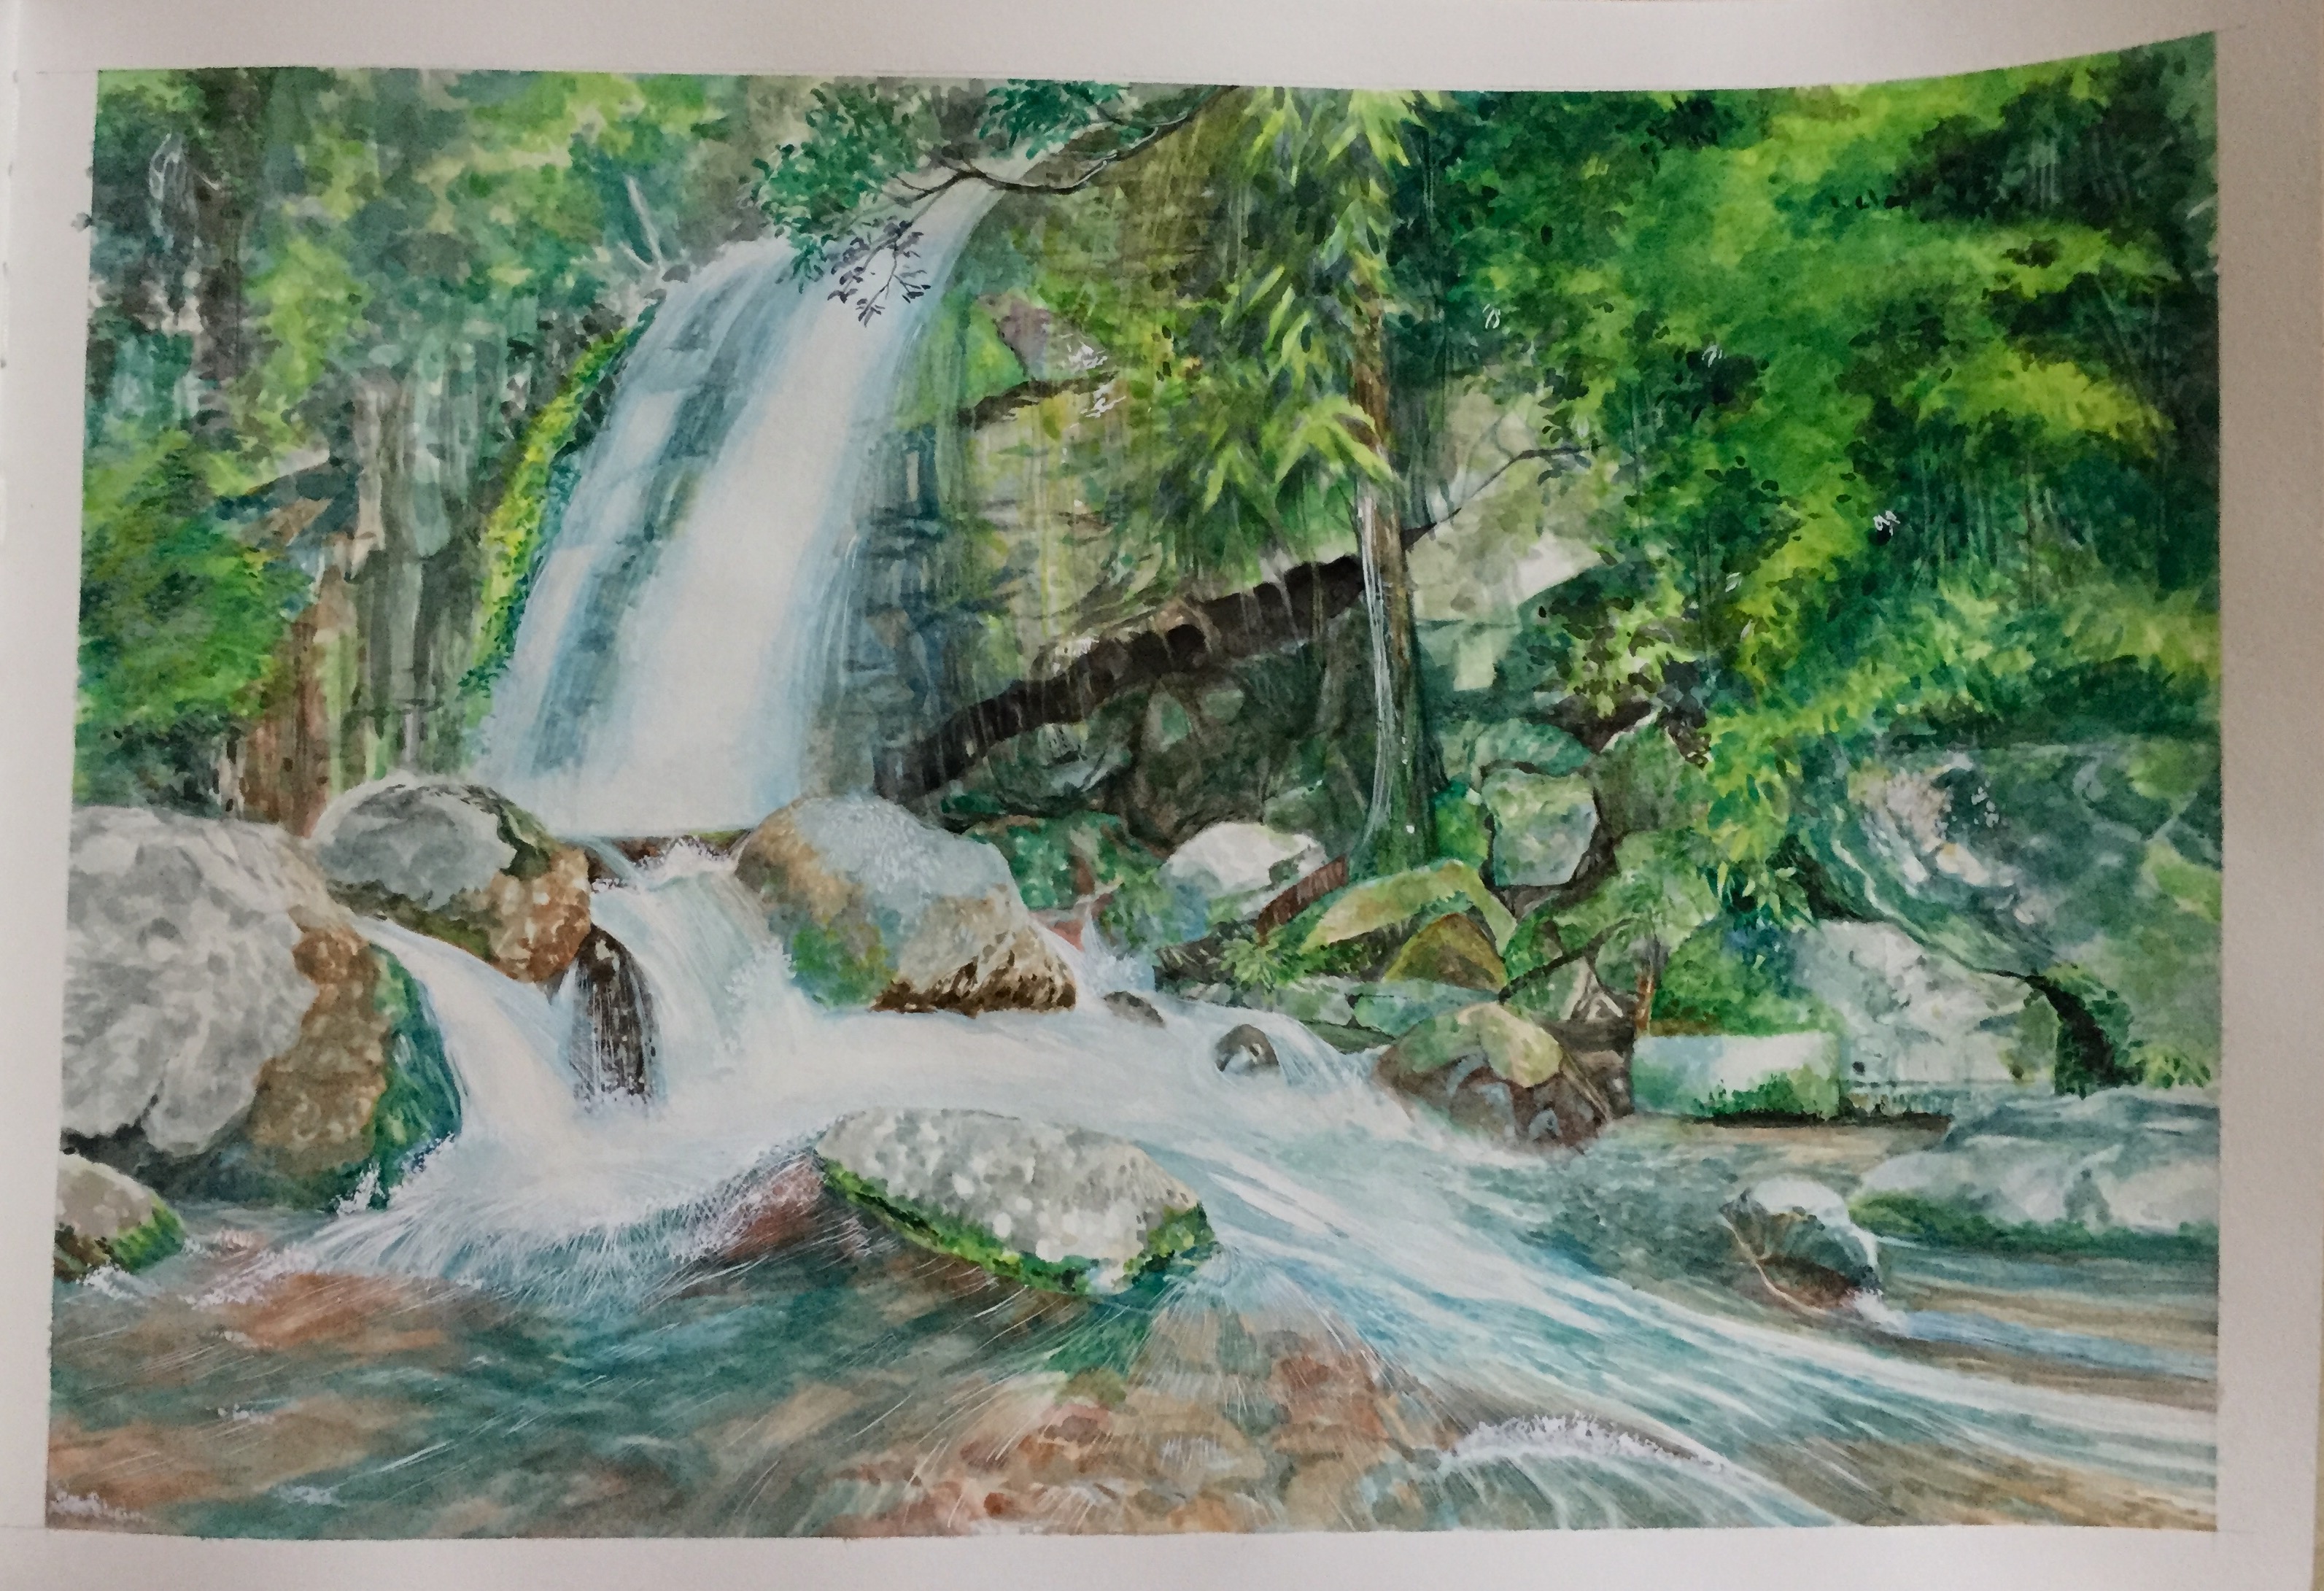 Vera Falls,Albay,Philippines